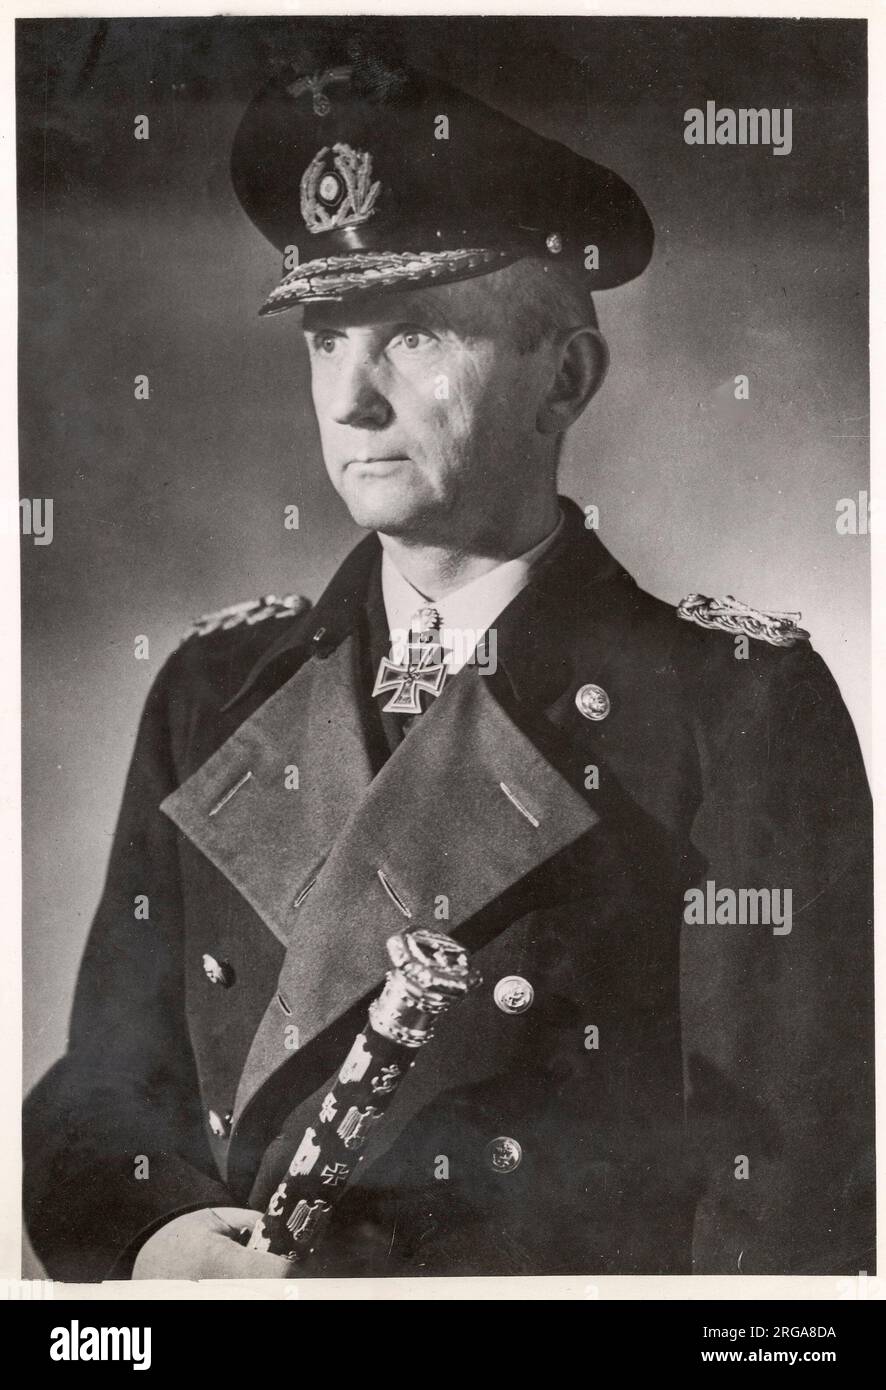 Photographie ancienne Seconde Guerre mondiale - amiral Karl Doenitz Donitz, marine allemande Banque D'Images